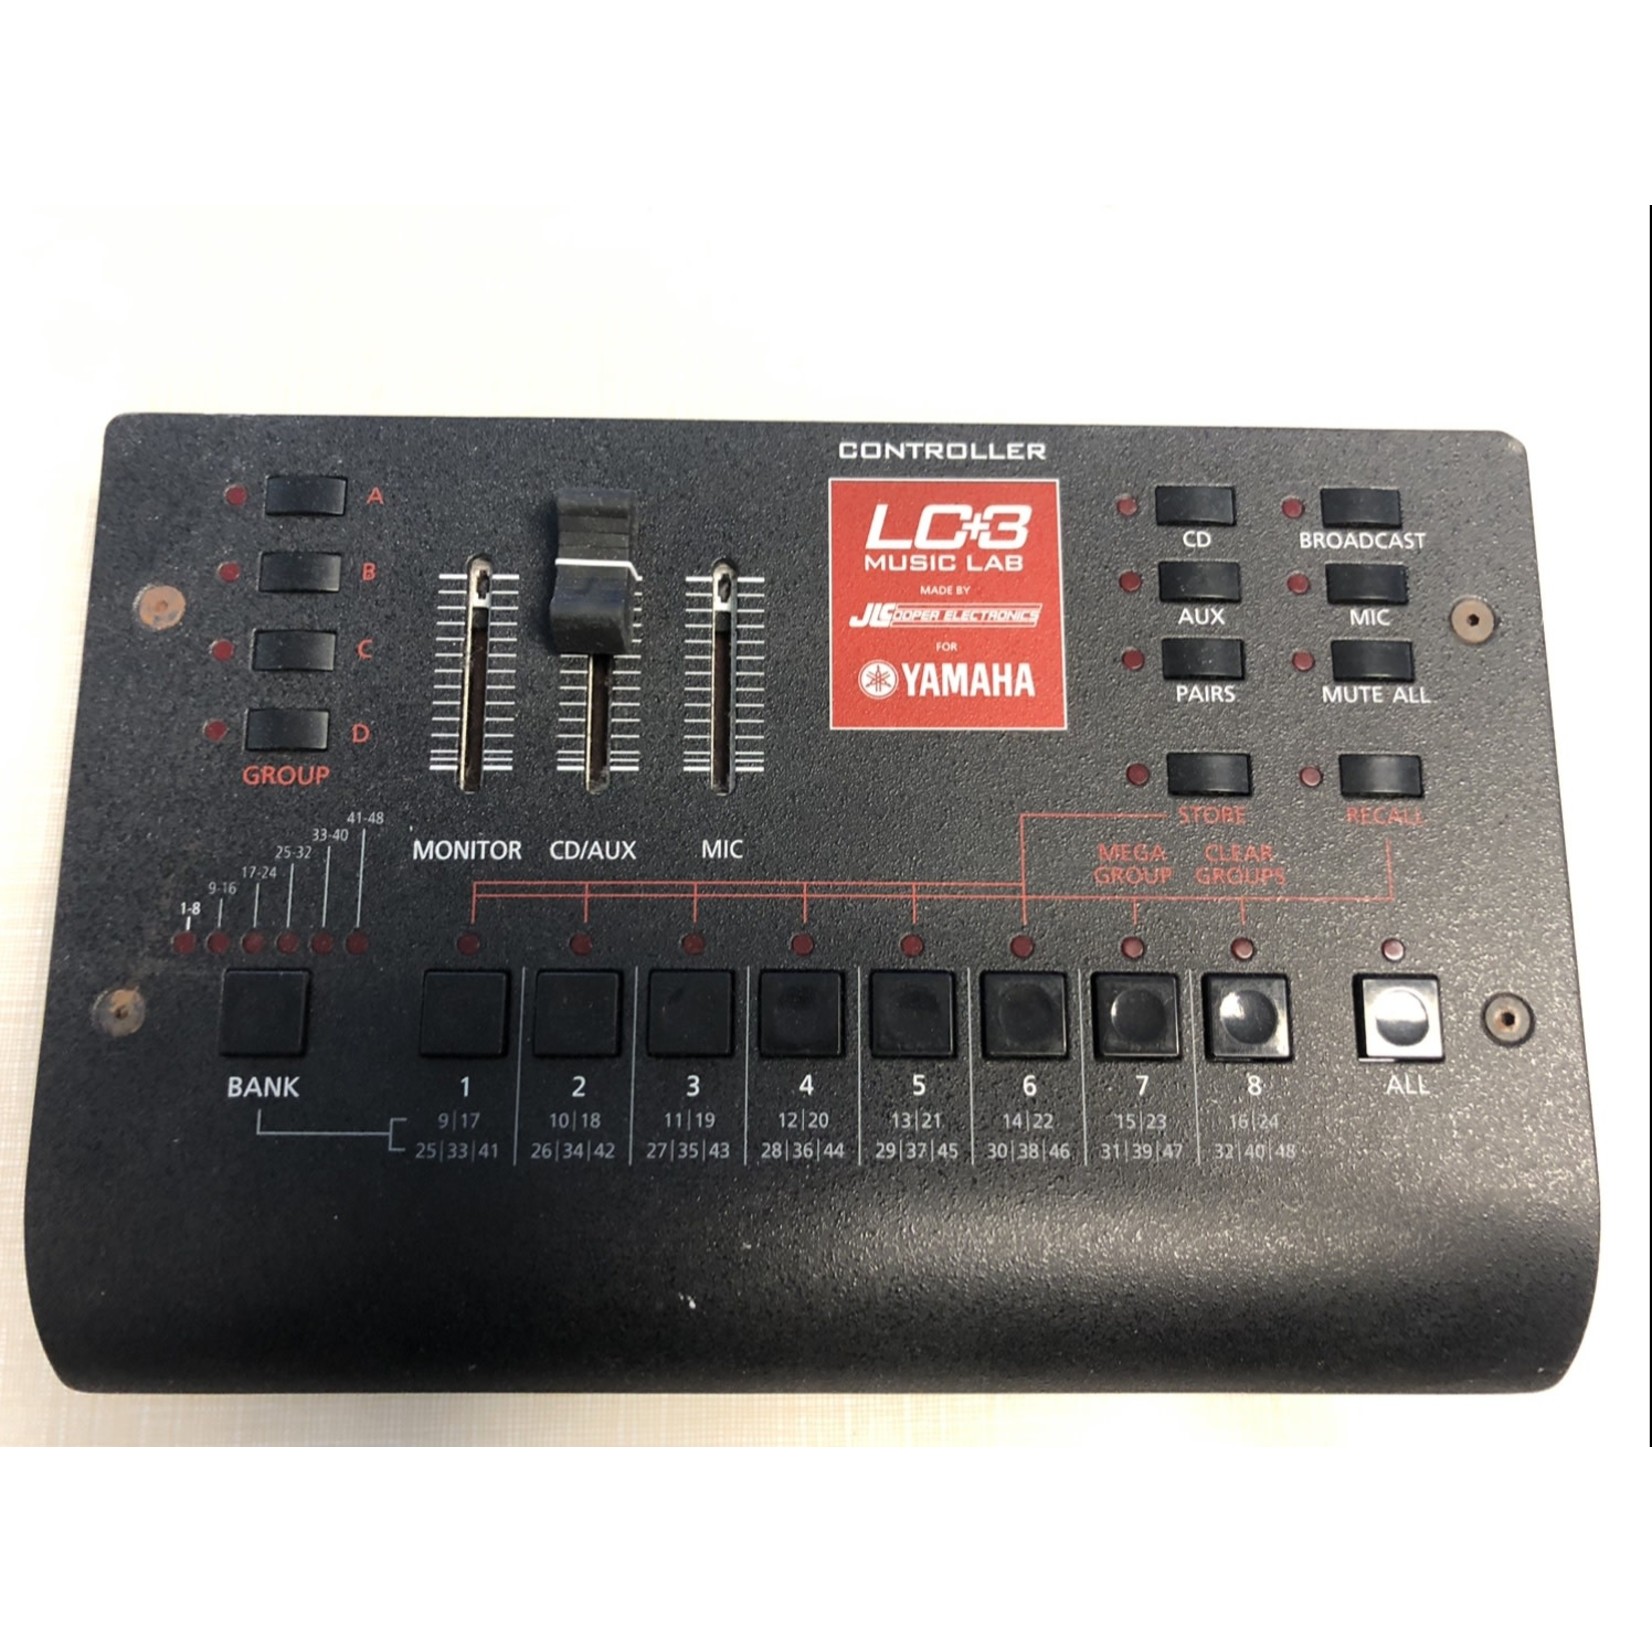 LC+3 Music Lab Controller